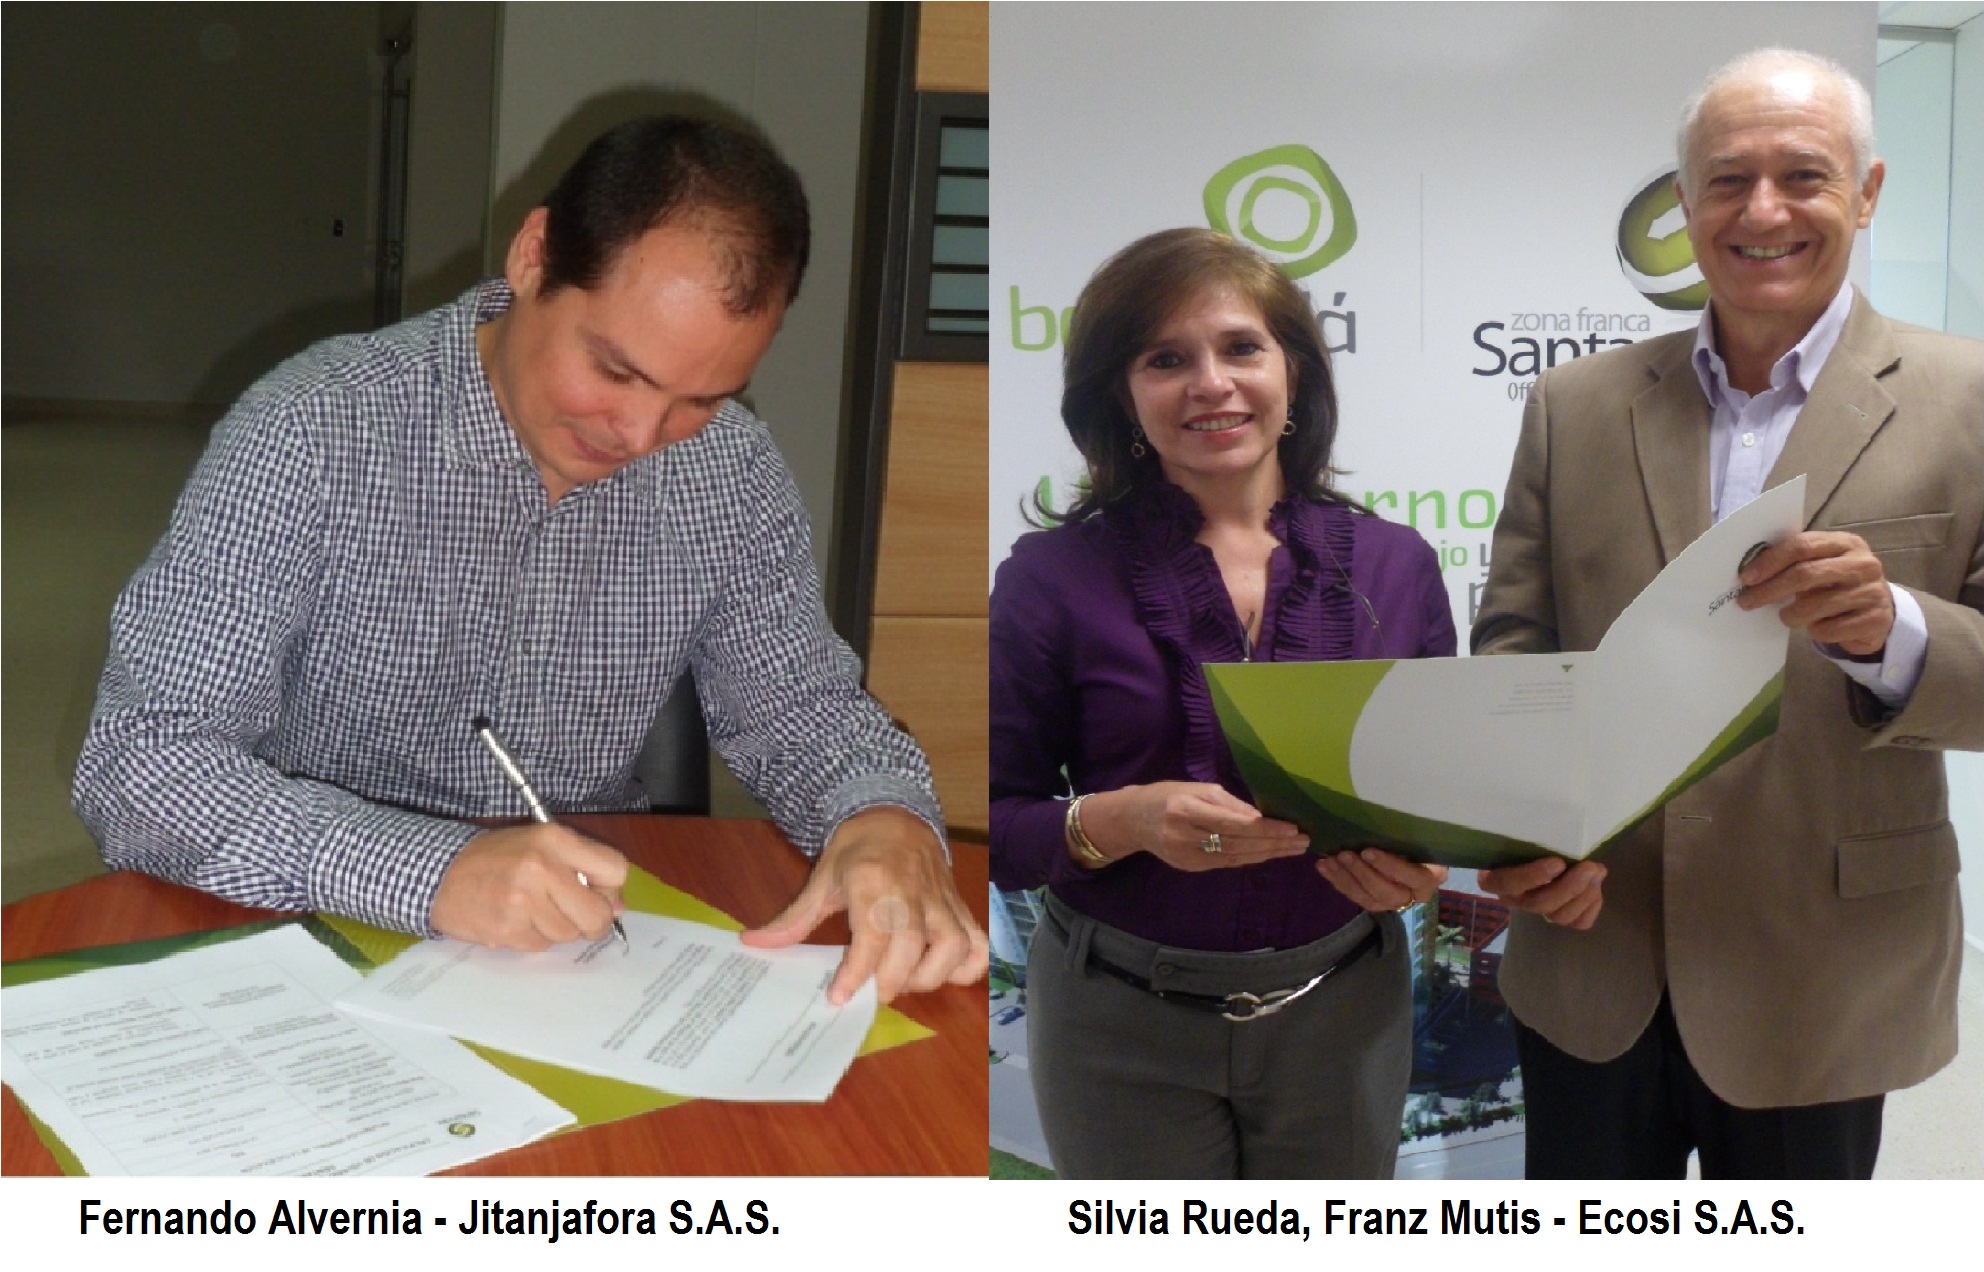 Zona Franca Santander Offshoring & Outsourcing Park culmina el 2012 con doce Usuarios Calificados